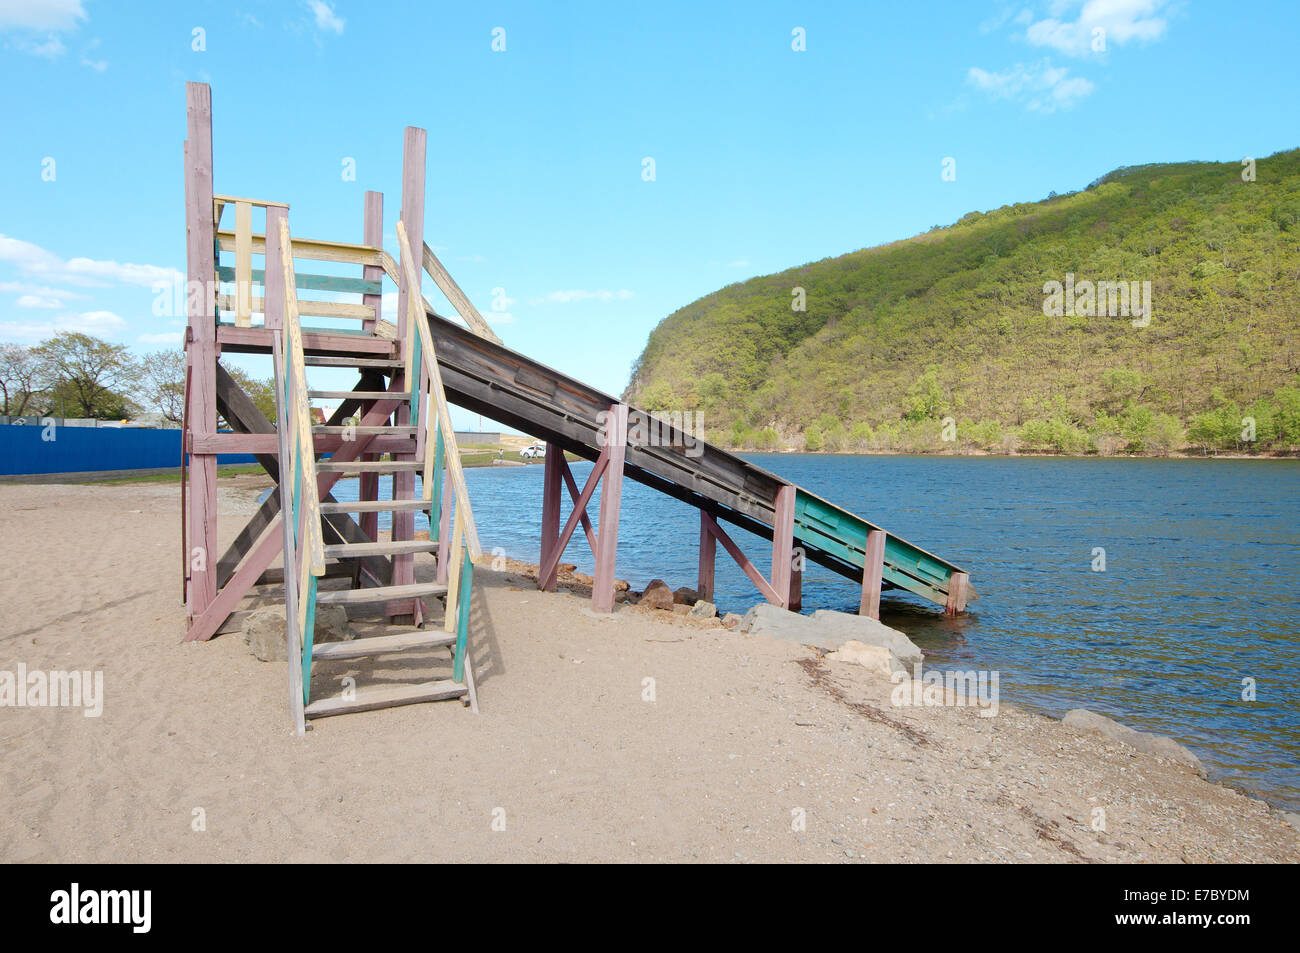 Toboggan de jeu en bois, lac Schuchie (eng. Pike Lake), Rudnaya Pristan, Primorye, Extrême-Orient, Russie Banque D'Images